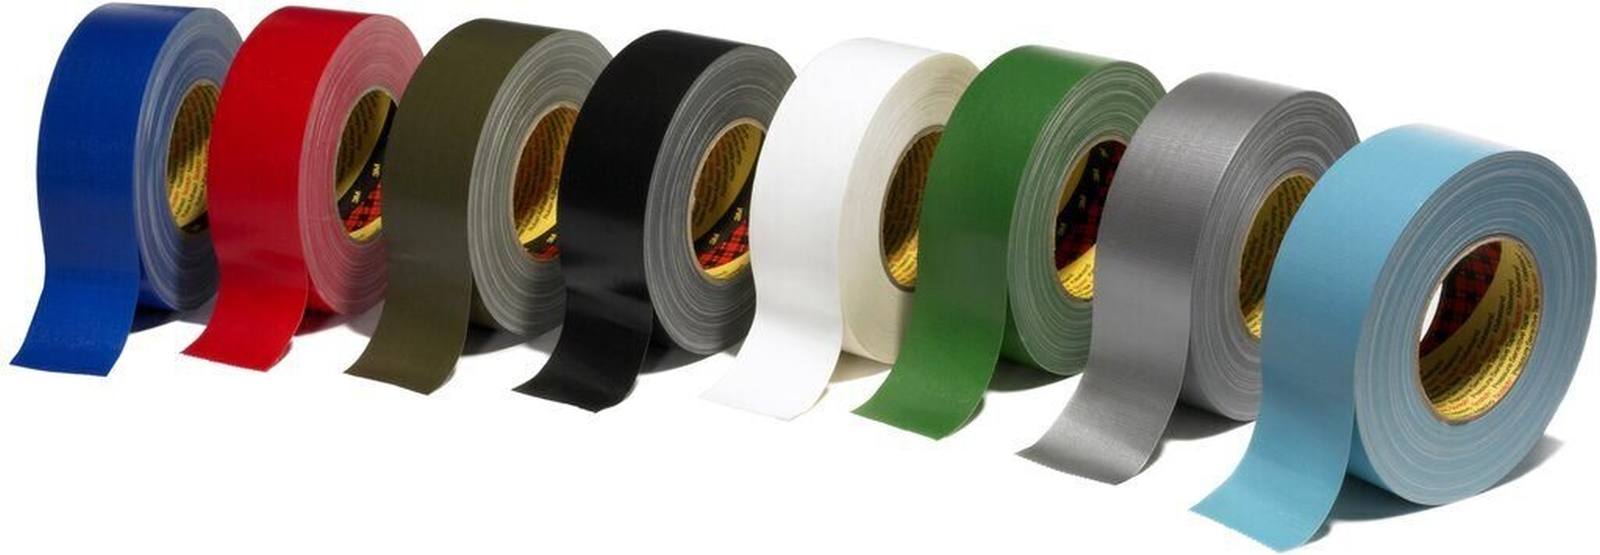 3M 389 Fabric tape, 19 mm x 50 m, silver